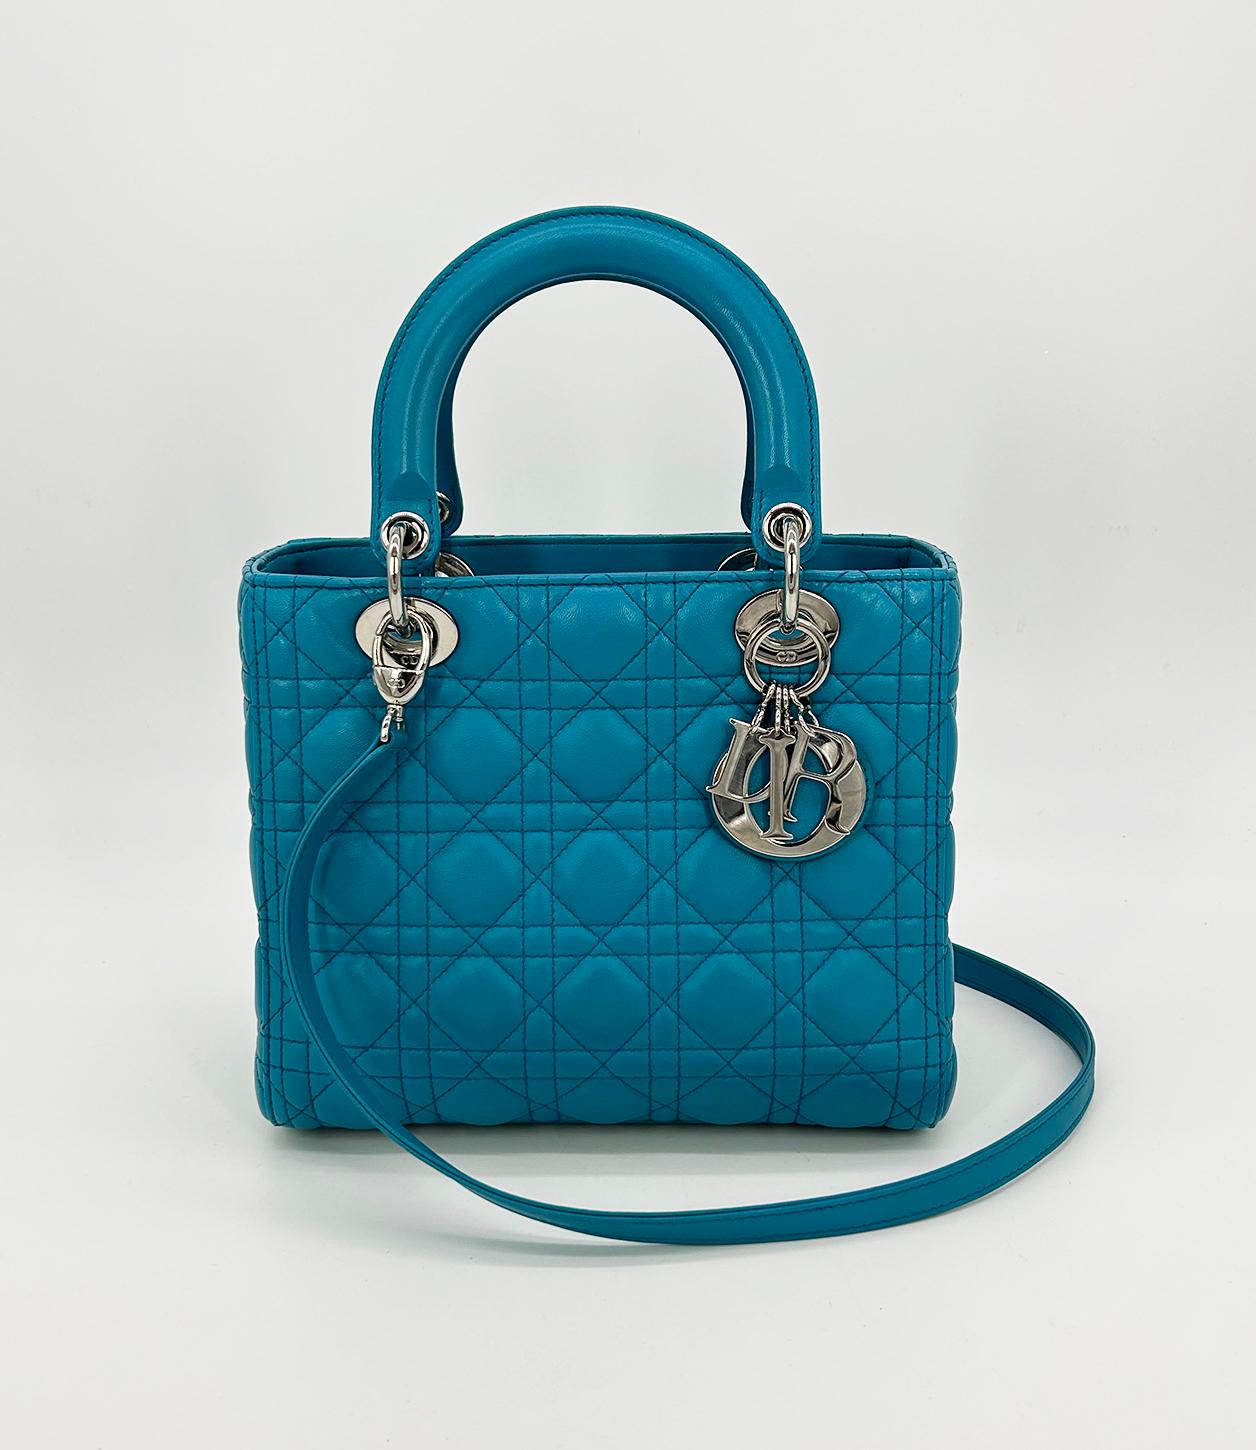 Christian Dior Teal Leather Cannage Medium Lady Di Bag For Sale 11